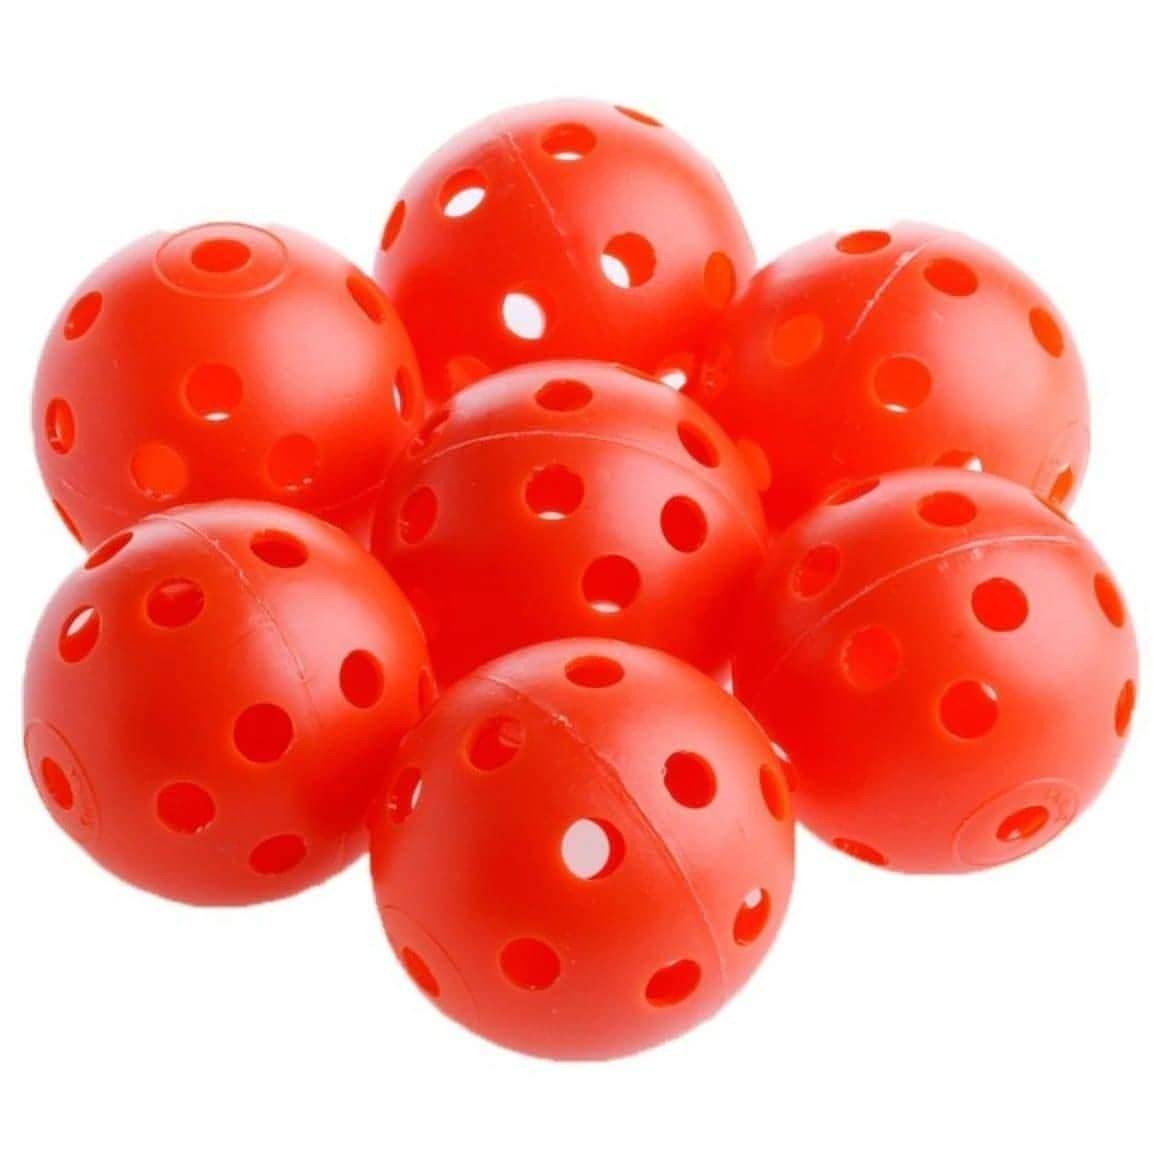 GMTee Hollow Practice (6 Pack) Golf Balls - Orange 4897053040024 - Start Fitness